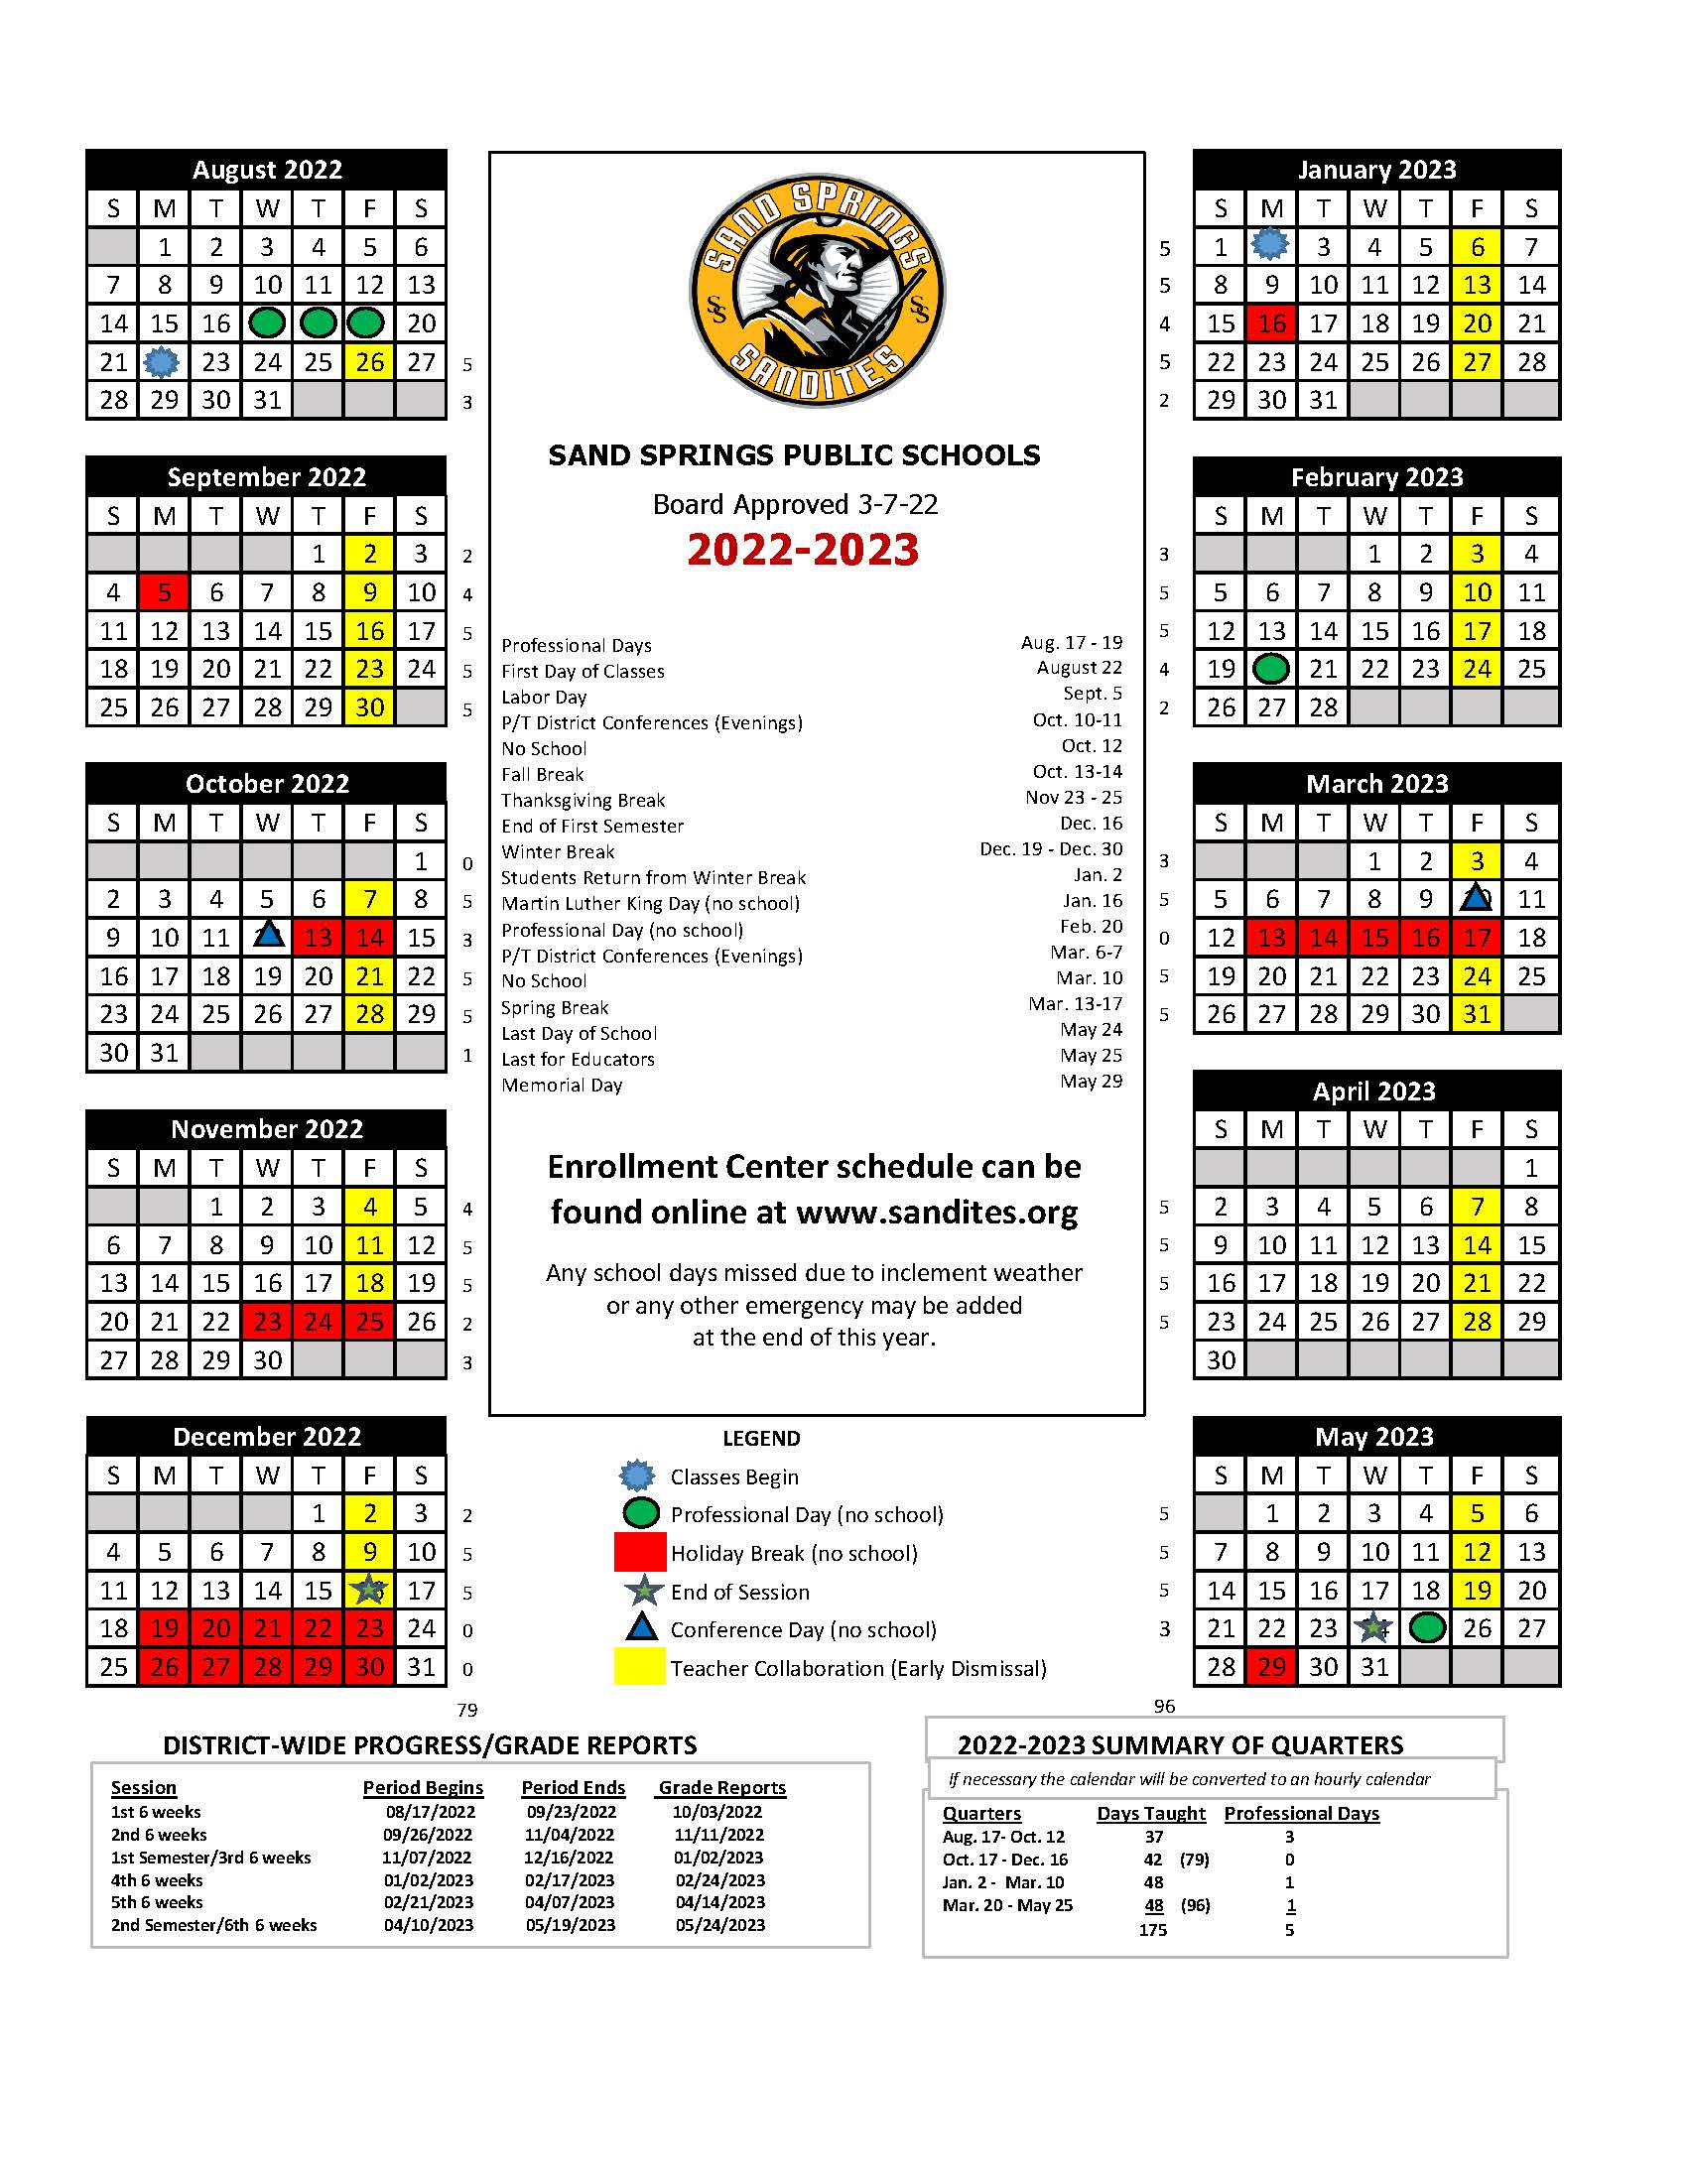 Approved School Calendar 2022-2023